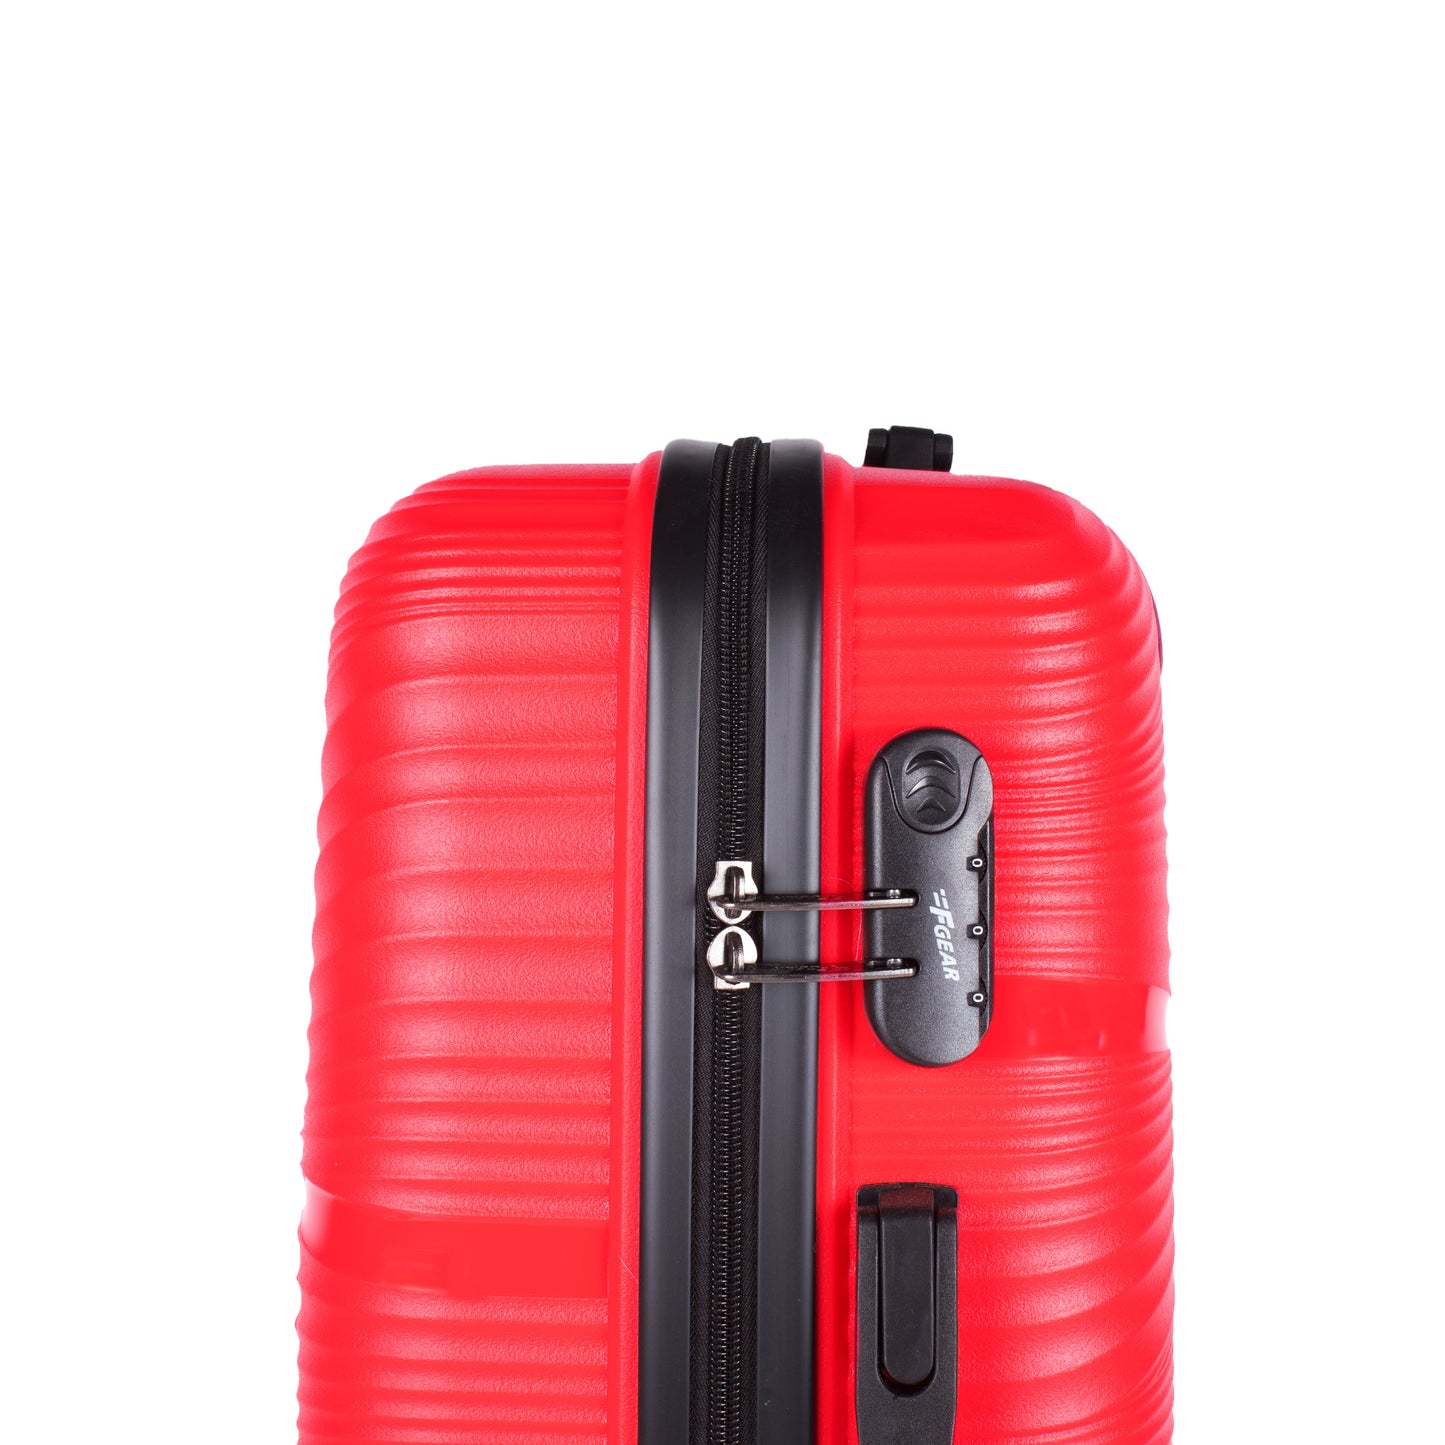 Joy PP008 24" Red Medium Check-in Suitcase